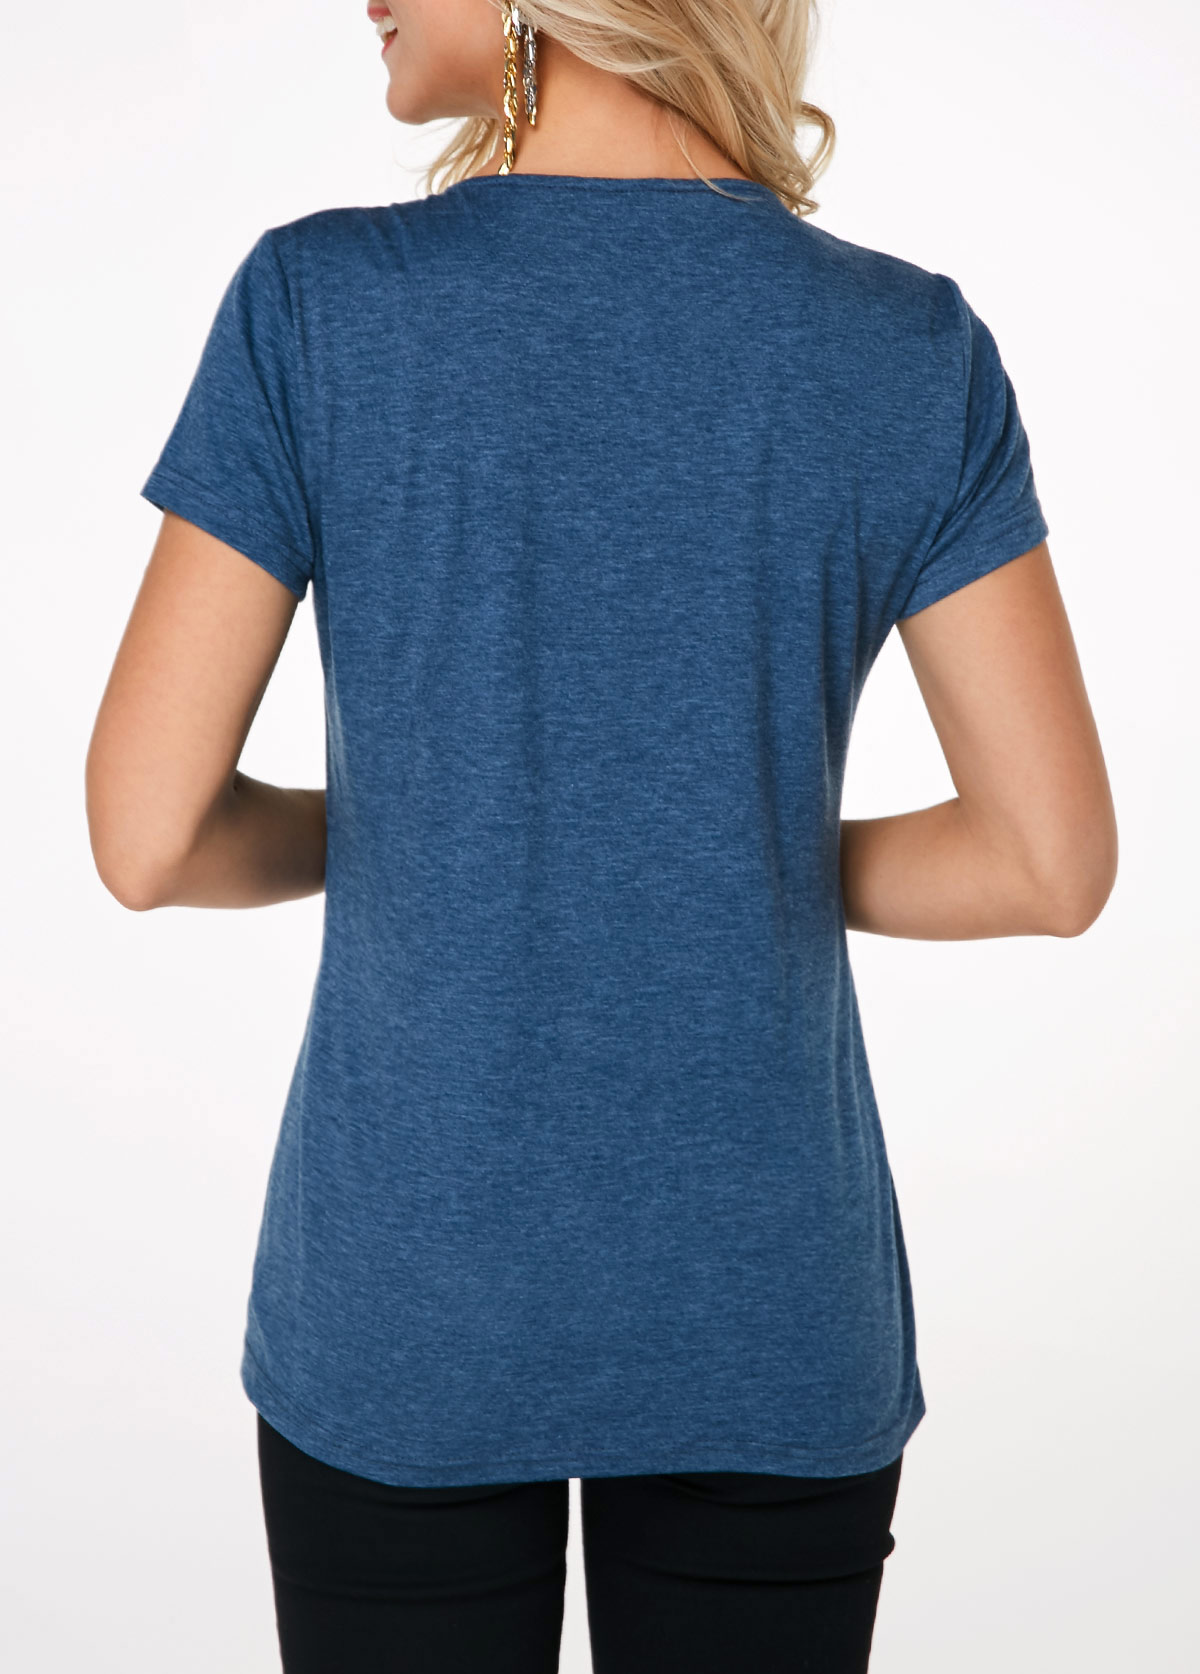 Short Sleeve Crinkle Chest Blue T Shirt | modlily.com - USD 27.77